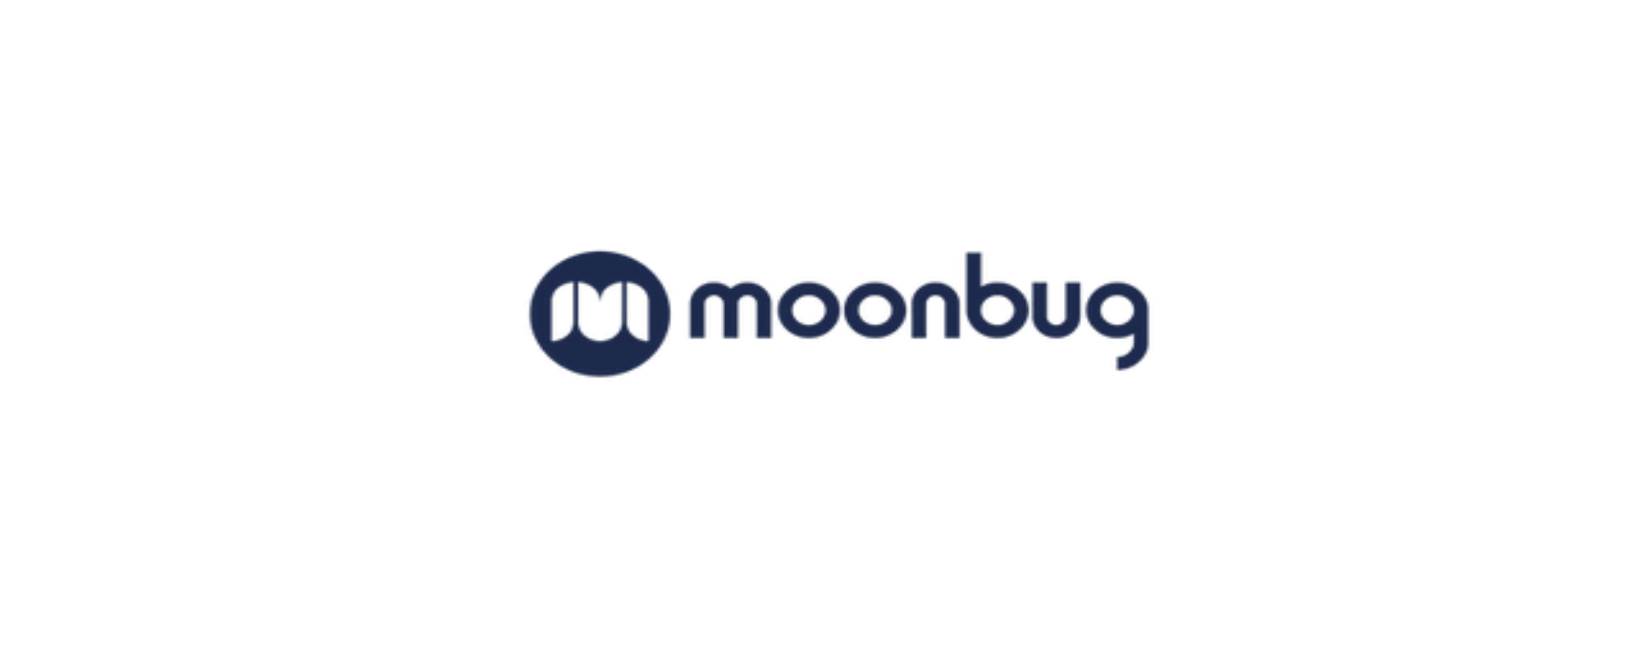 Moonbug Discount Code 2022